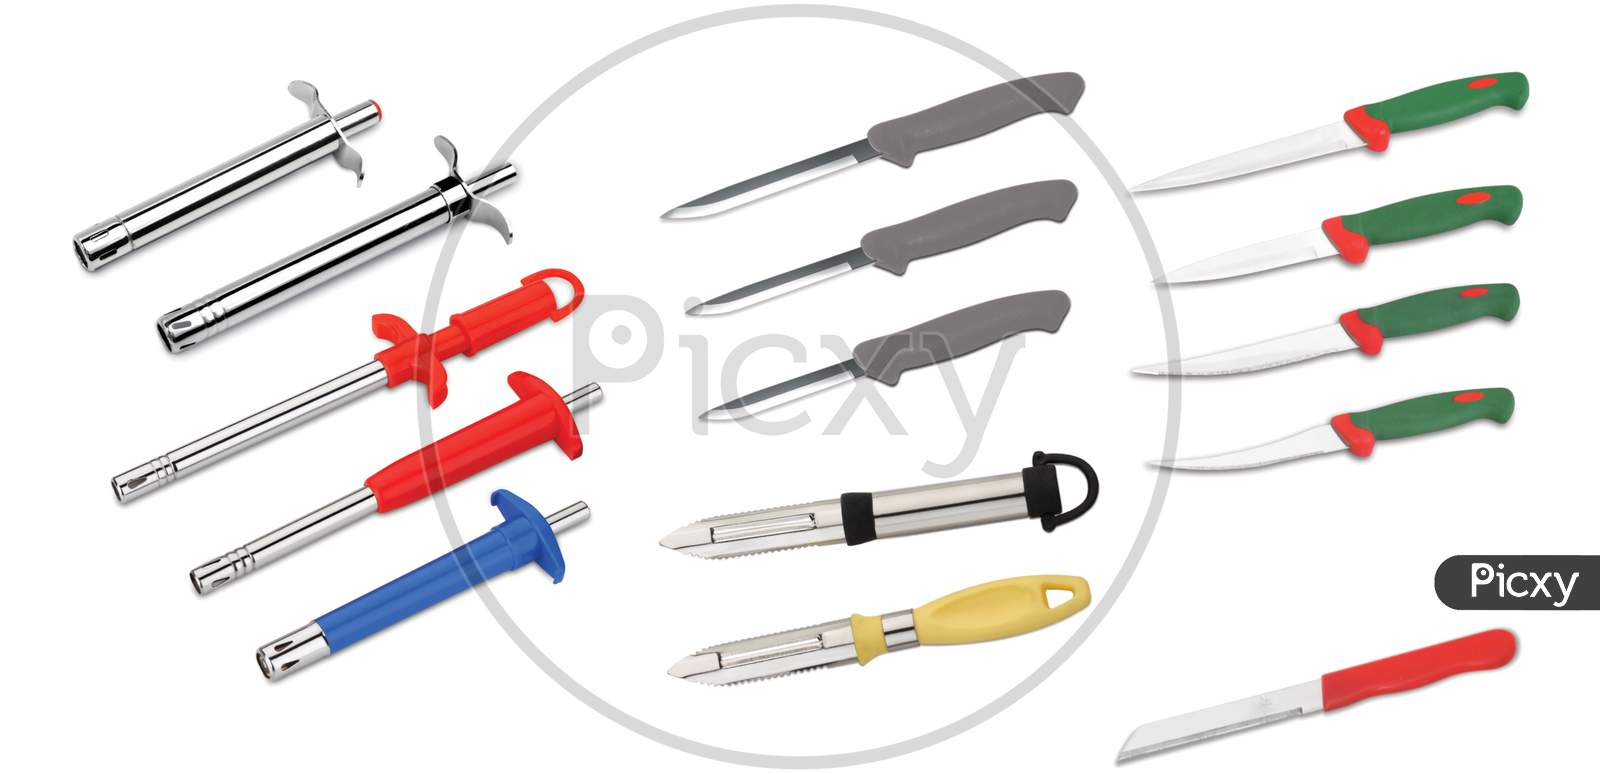 Set Of Kitchen Knives Use For Kitchen, Cutting Sharp Knife, Kitchen Utensils, Gas Lighter